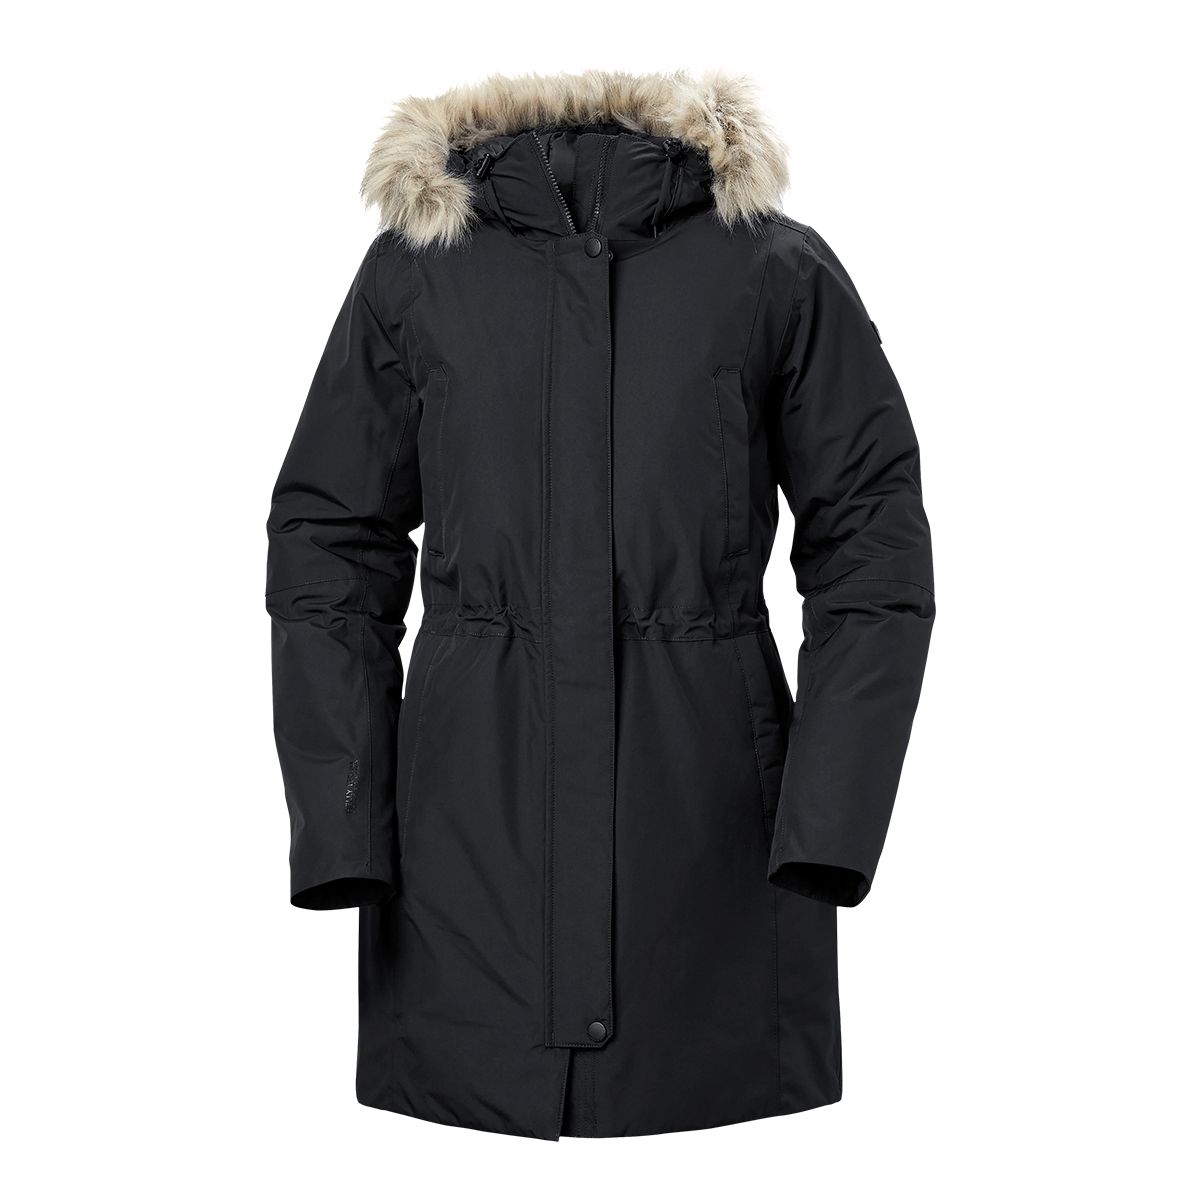 Parka Jacket 8.0, Winter, Black